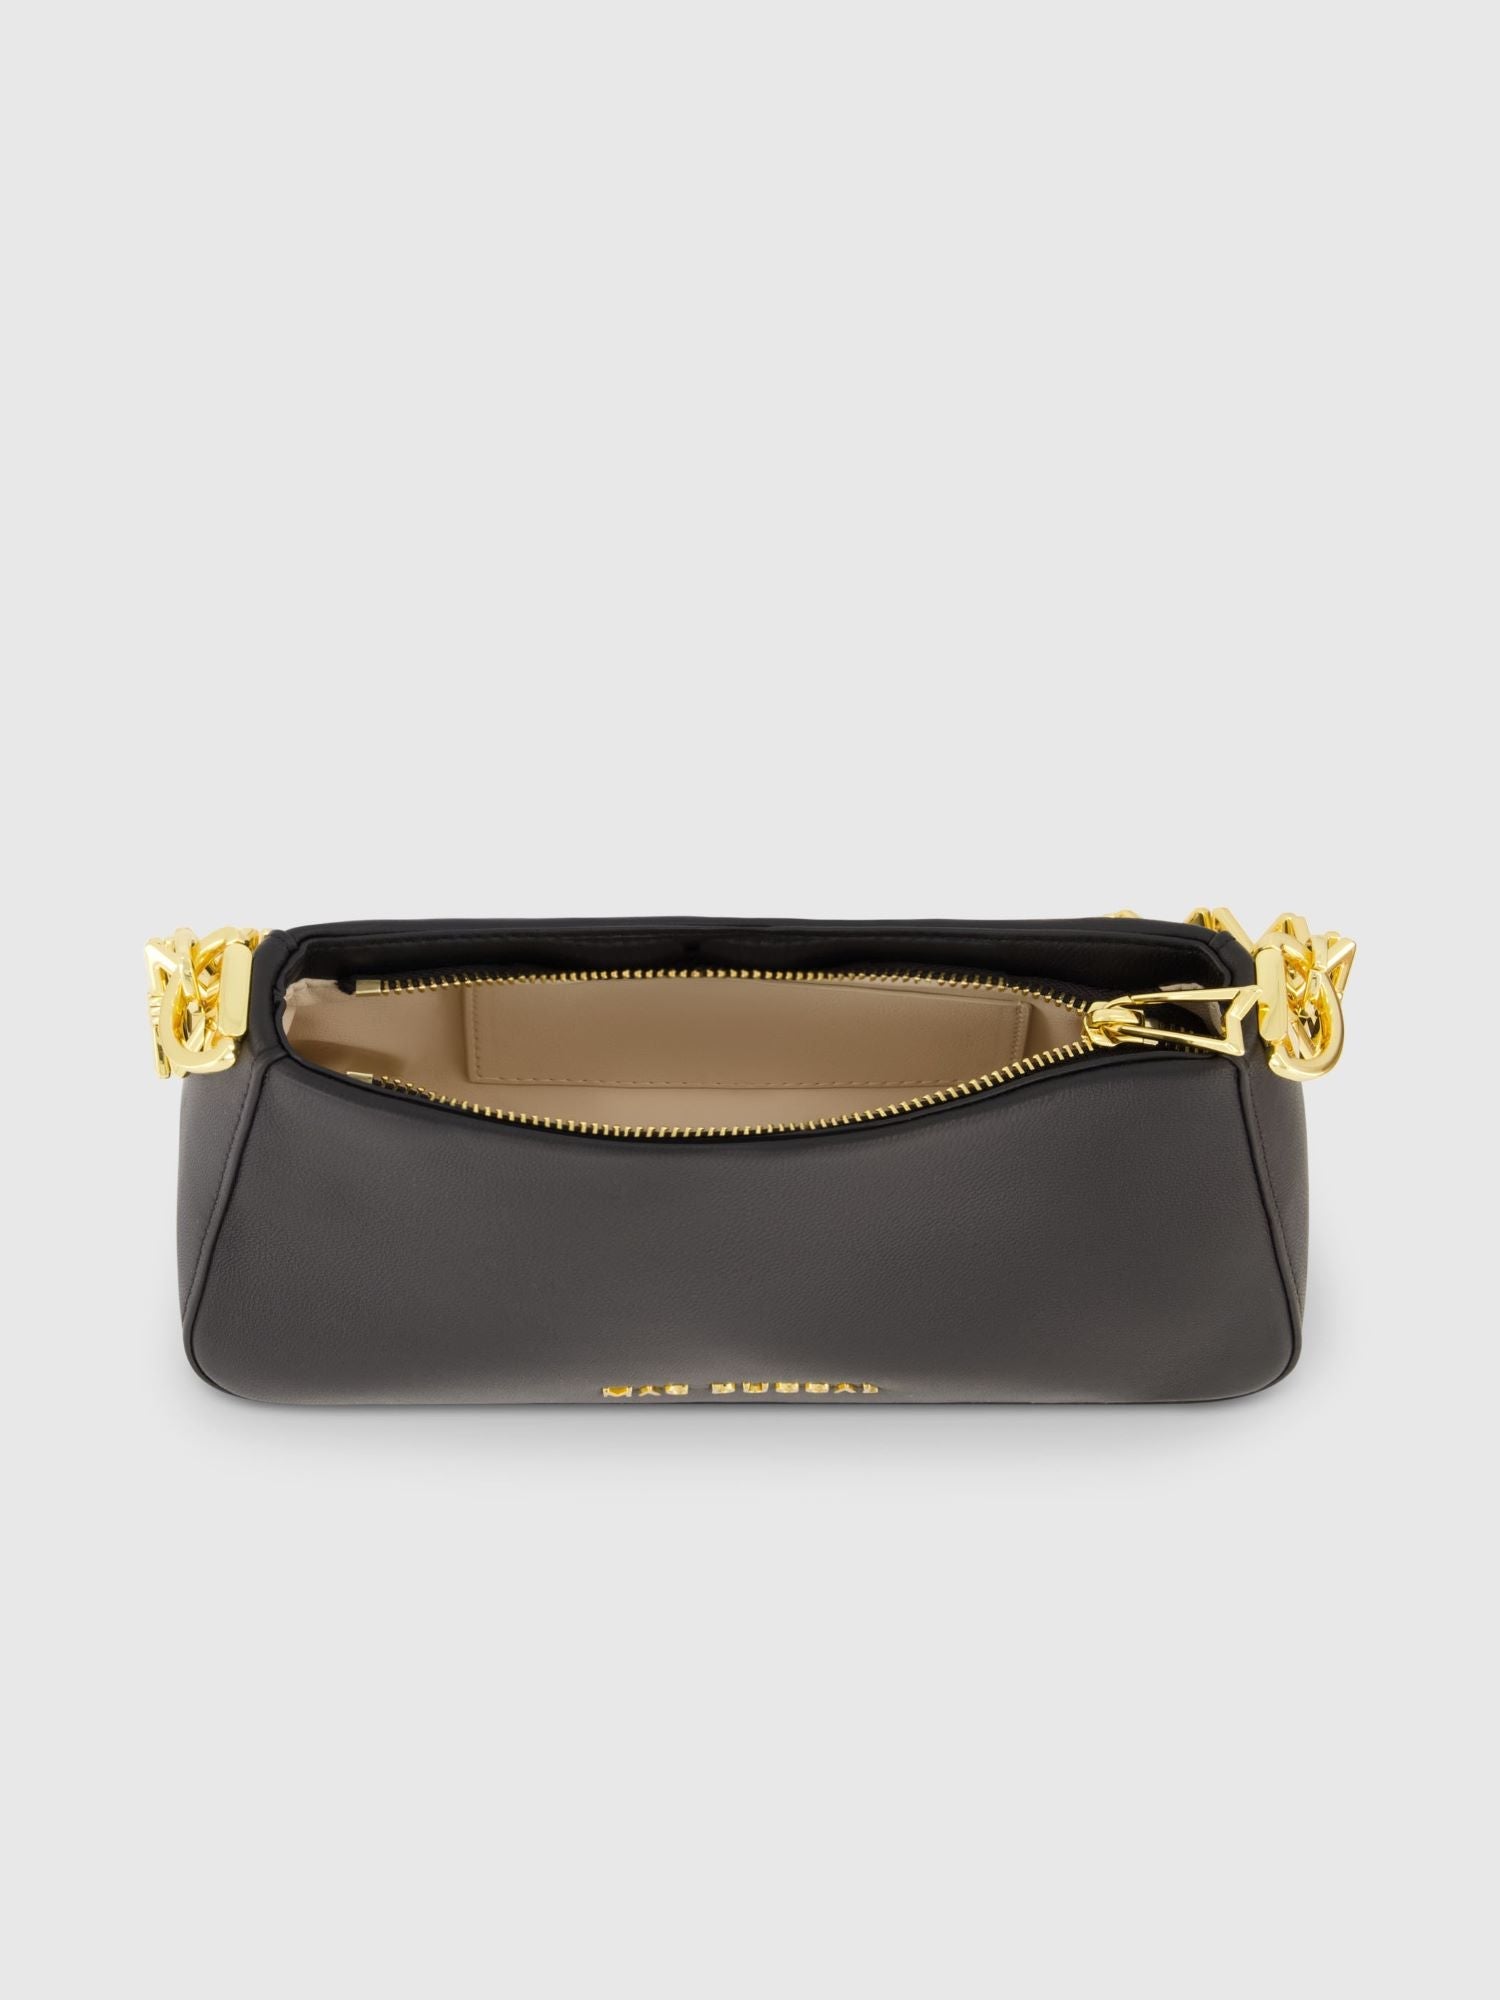 Gold Strap Small Black Nappa Leather Shoulder Bag